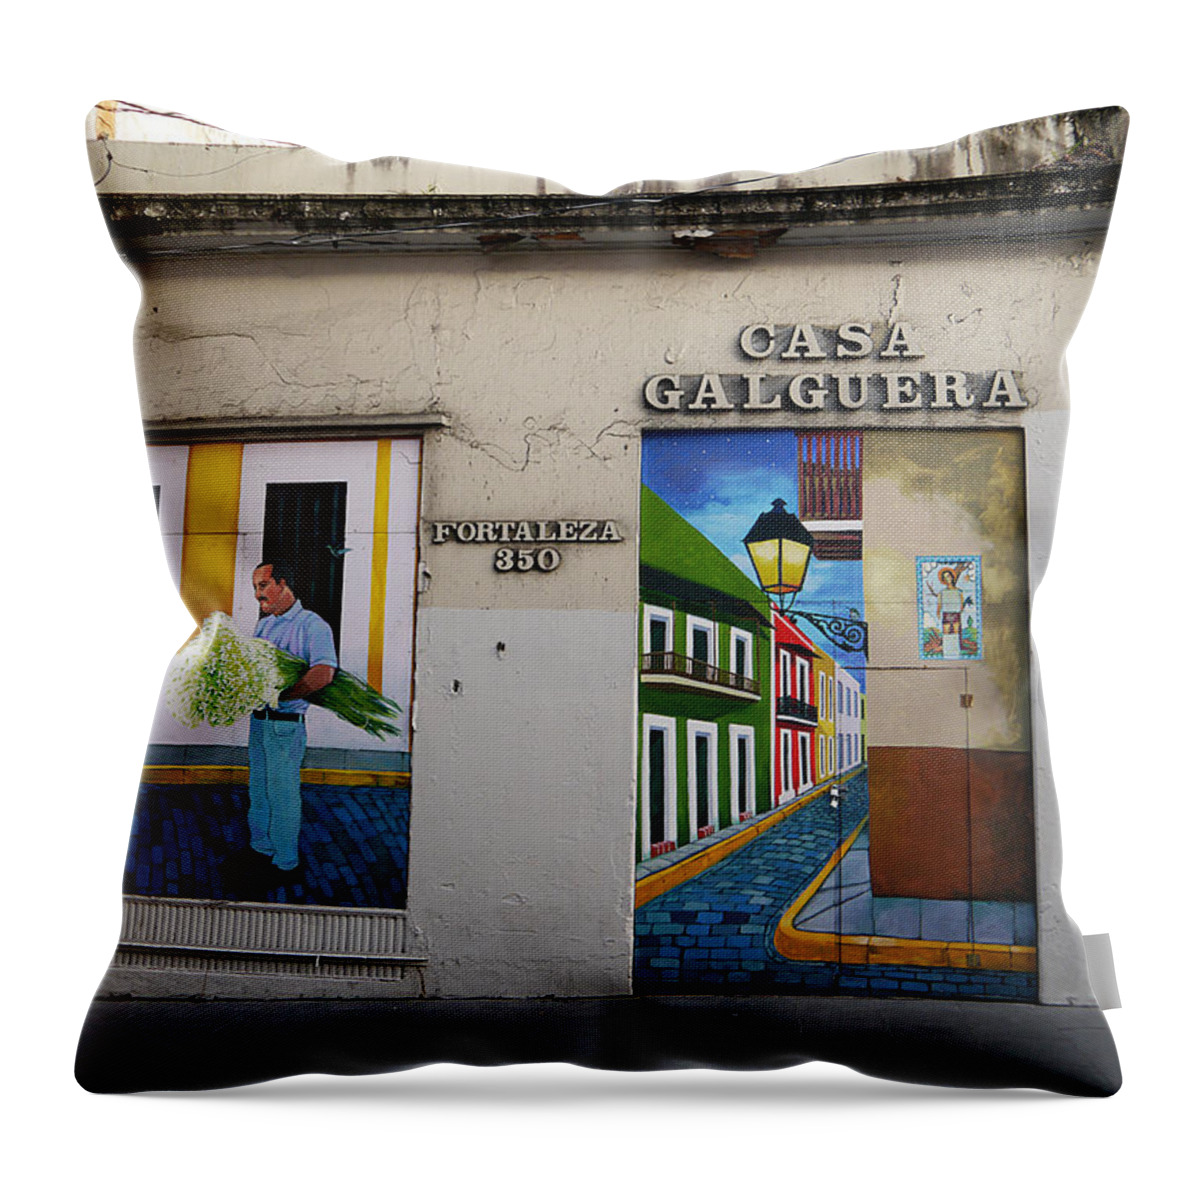 Richard Reeve Throw Pillow featuring the photograph San Juan - Casa Galguera Mural by Richard Reeve